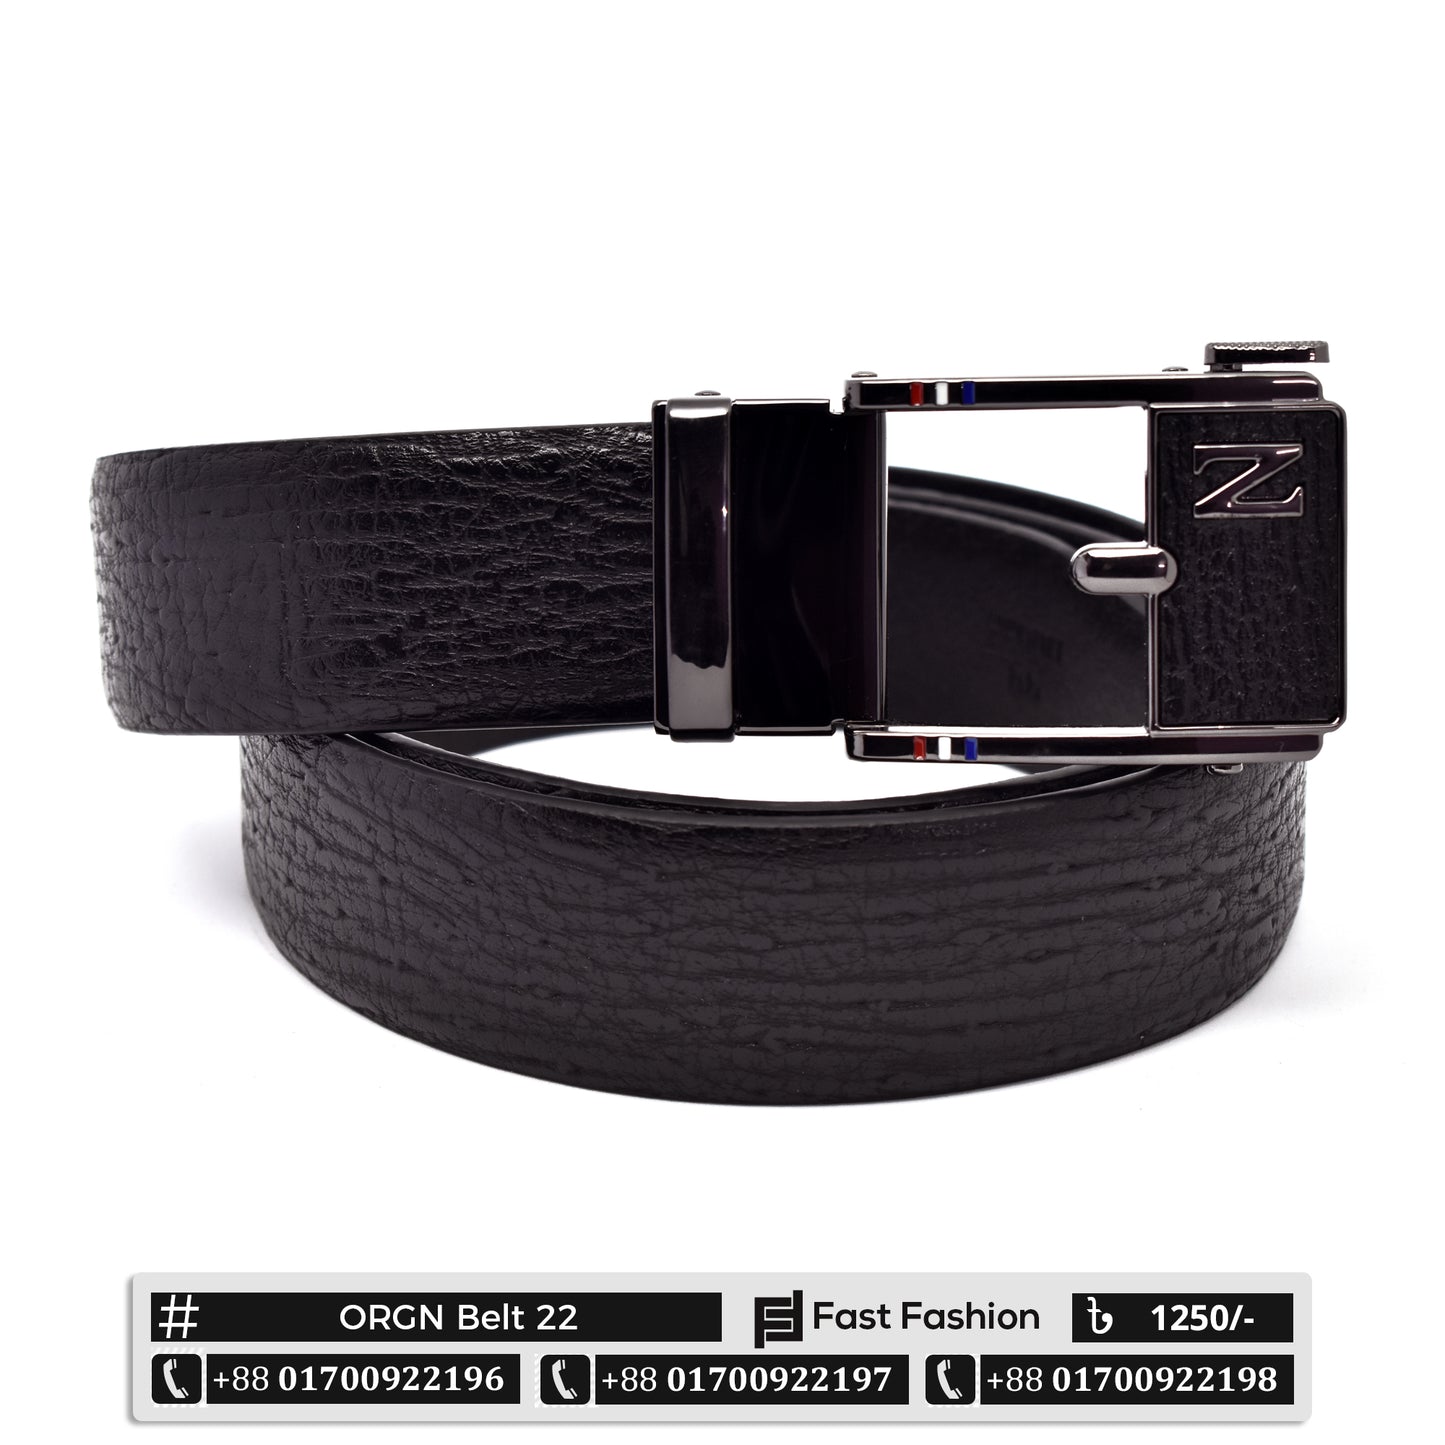 Premium Quality Original Leather Belt - ORGN Belt 22